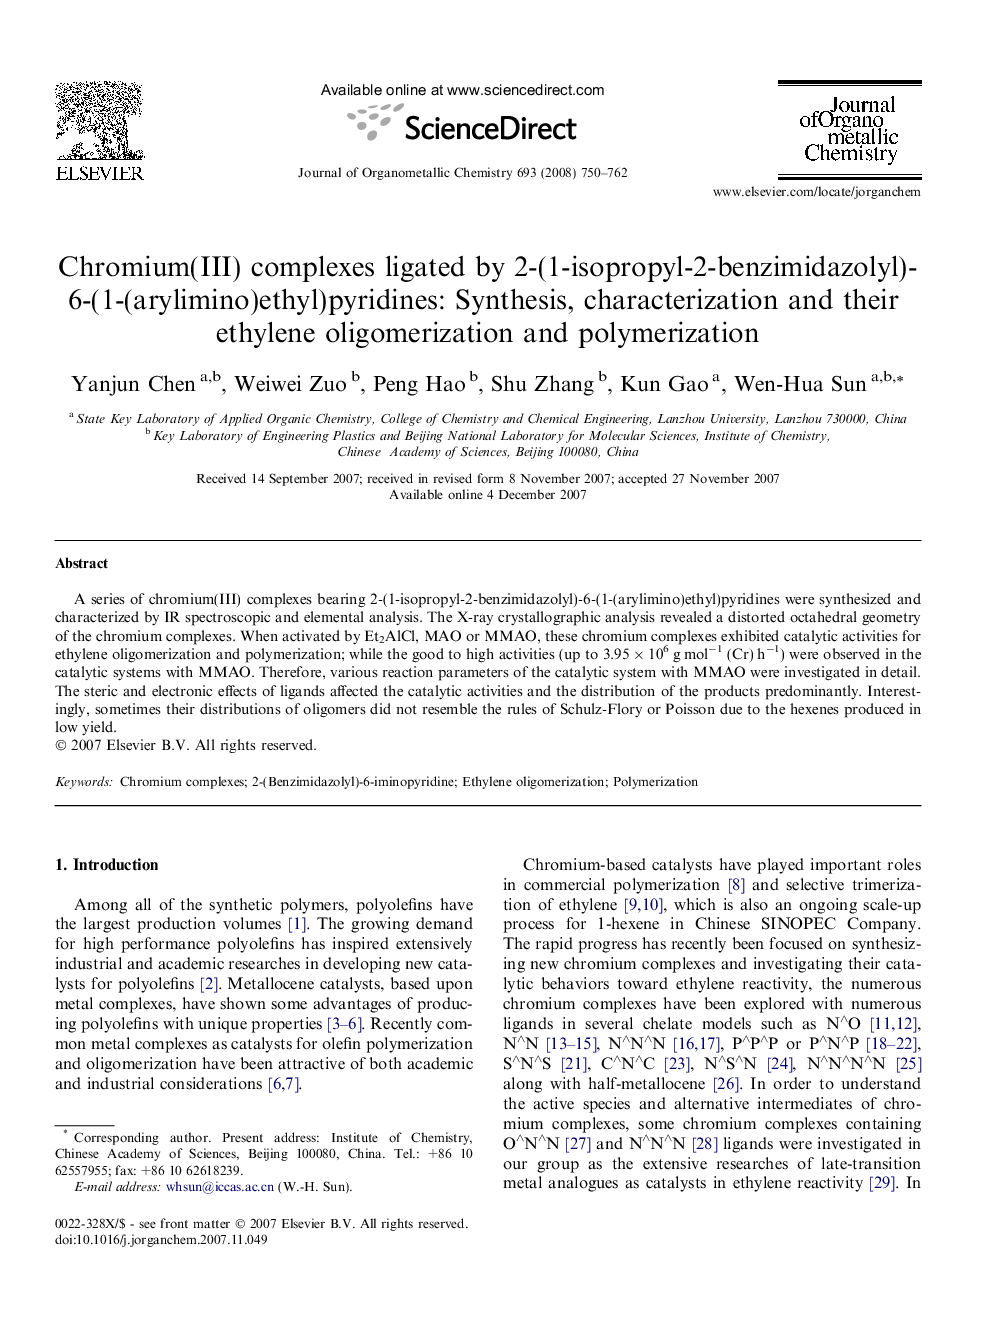 Chromium(III) complexes ligated by 2-(1-isopropyl-2-benzimidazolyl)-6-(1-(arylimino)ethyl)pyridines: Synthesis, characterization and their ethylene oligomerization and polymerization